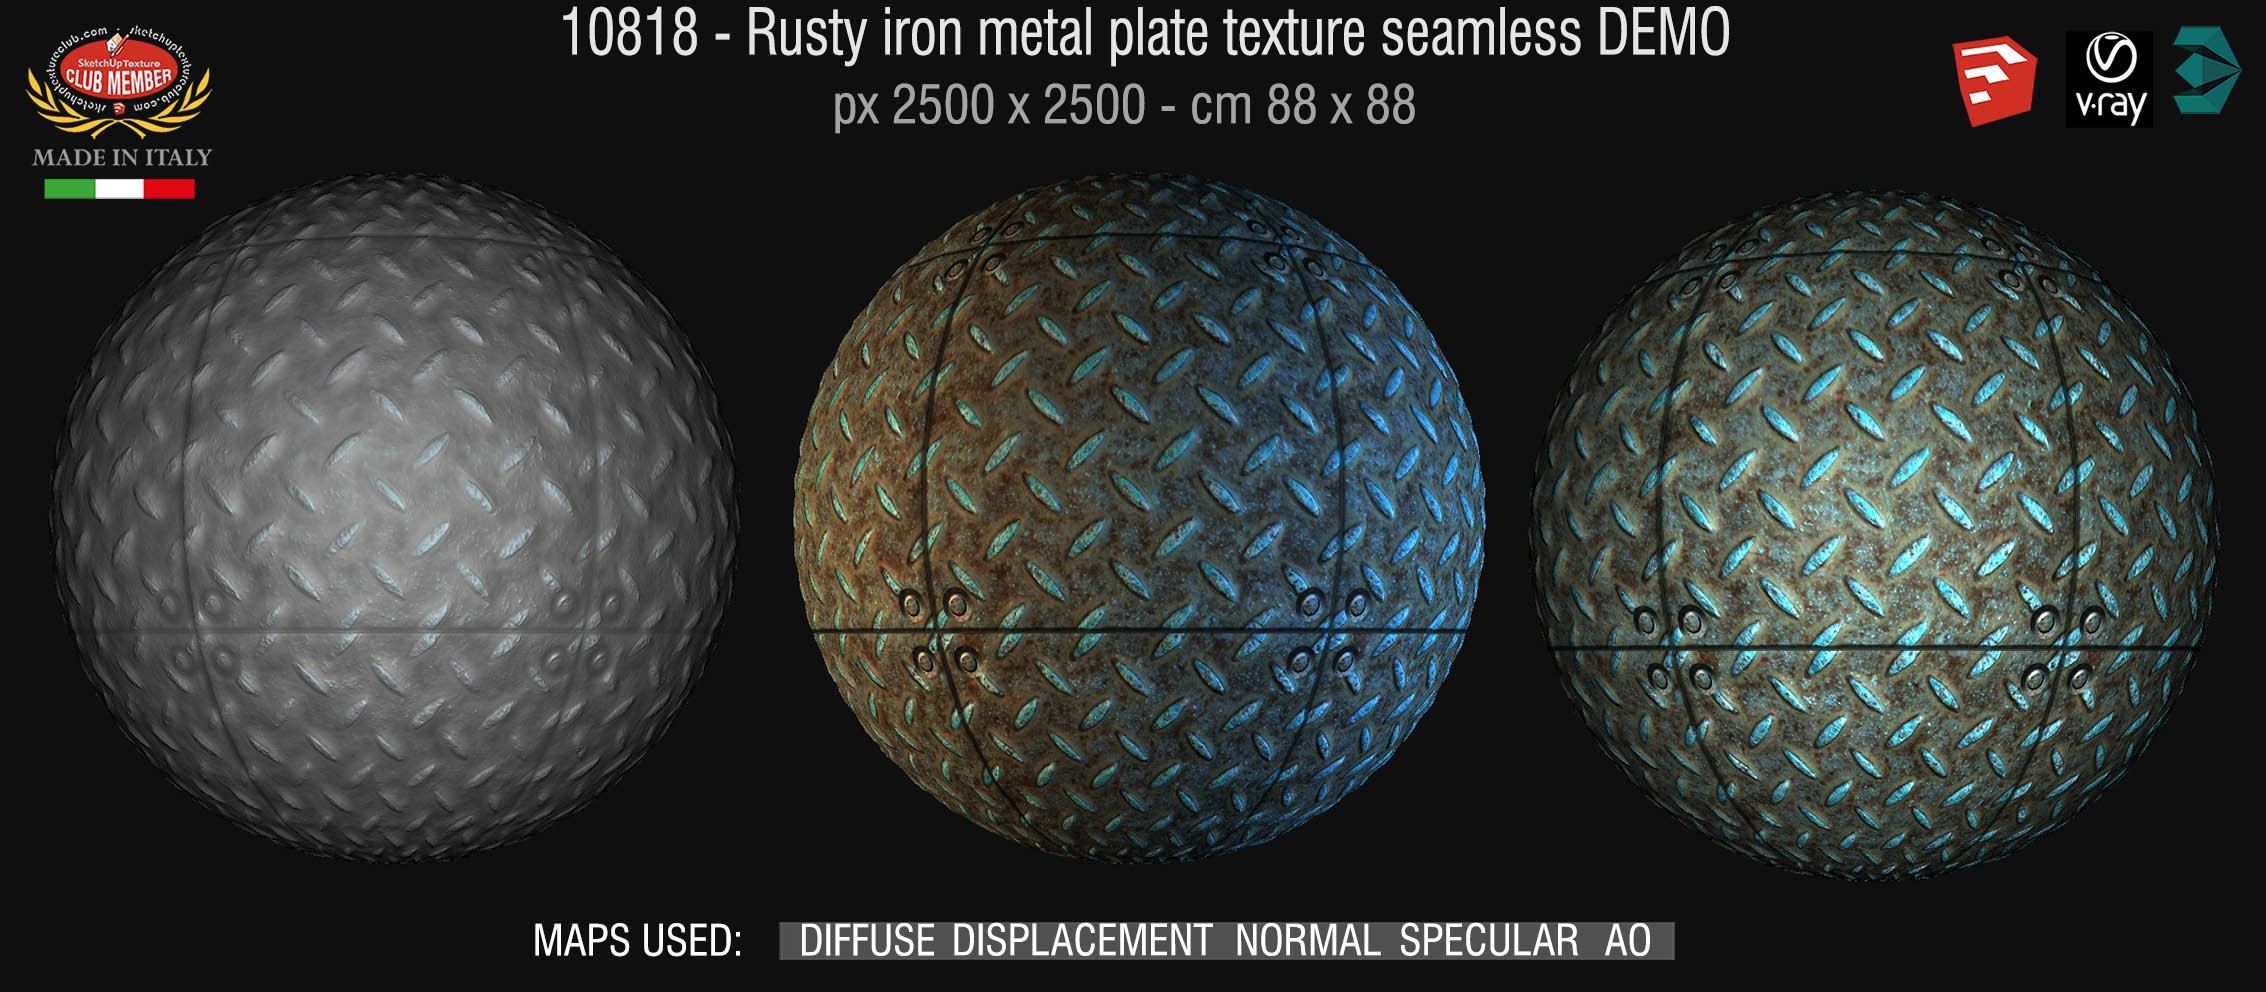 10818 HR Rusty iron metal plate texture seamless + maps DEMO